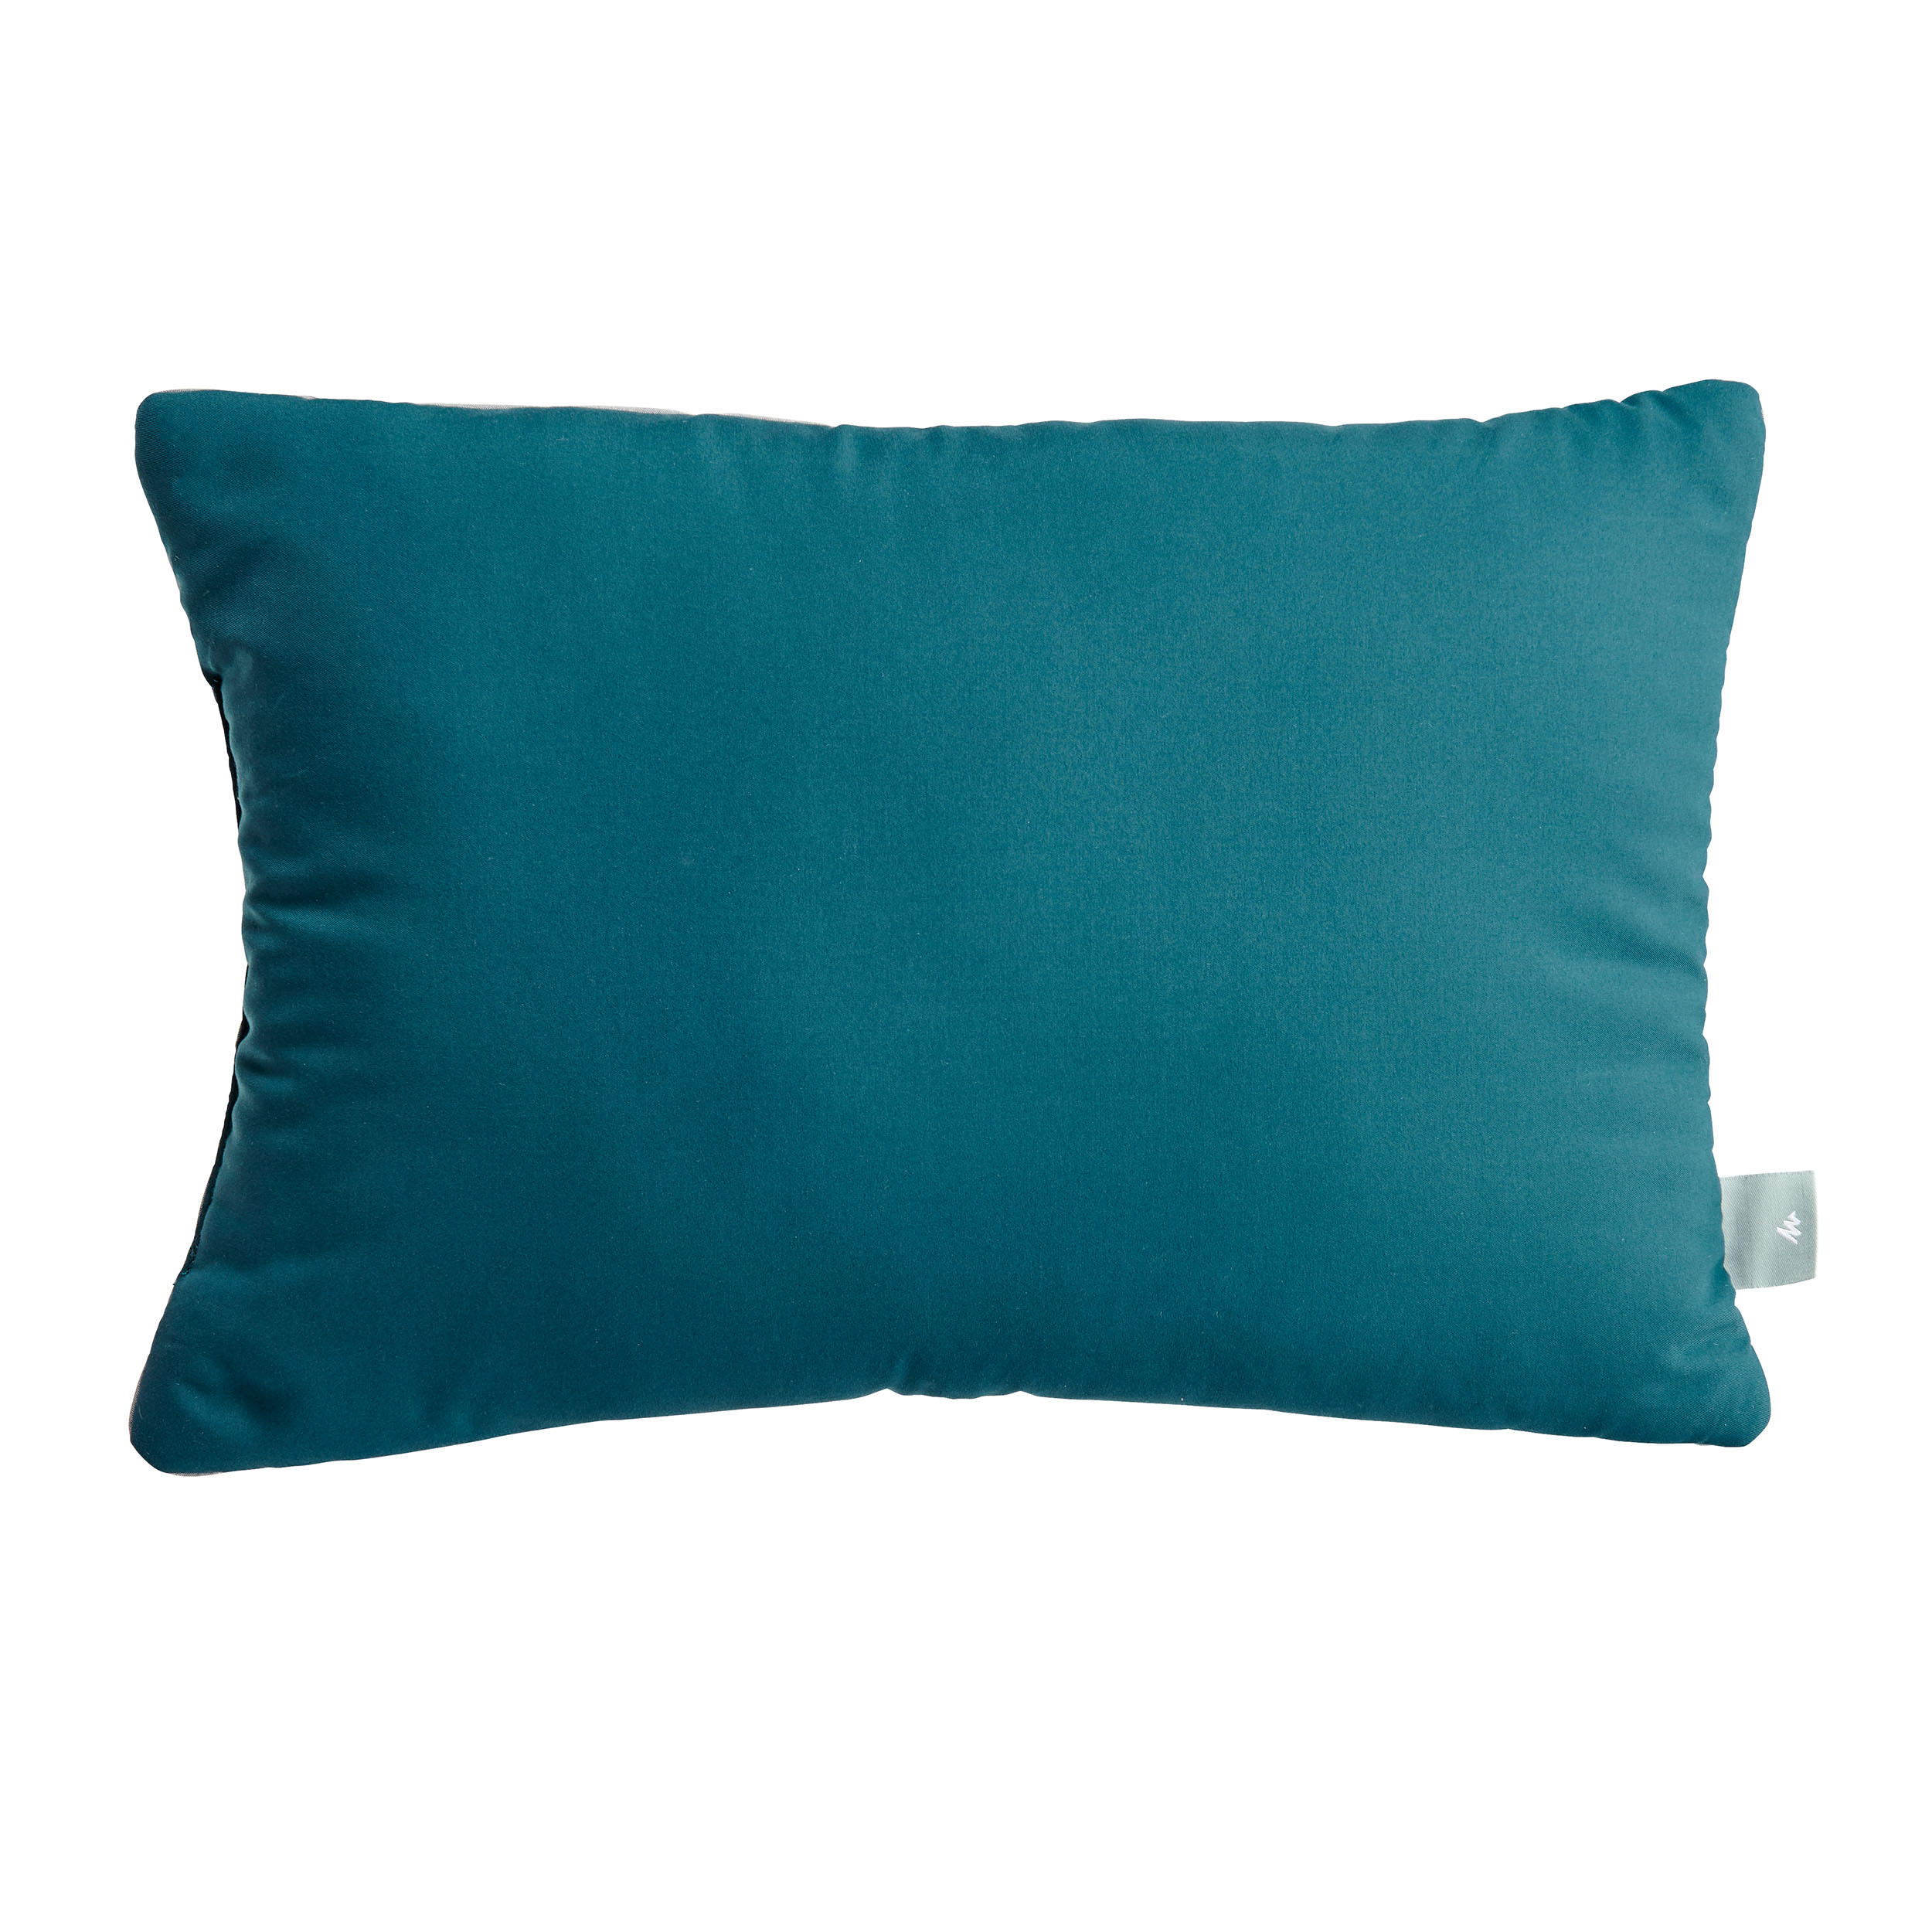 decathlon pillow